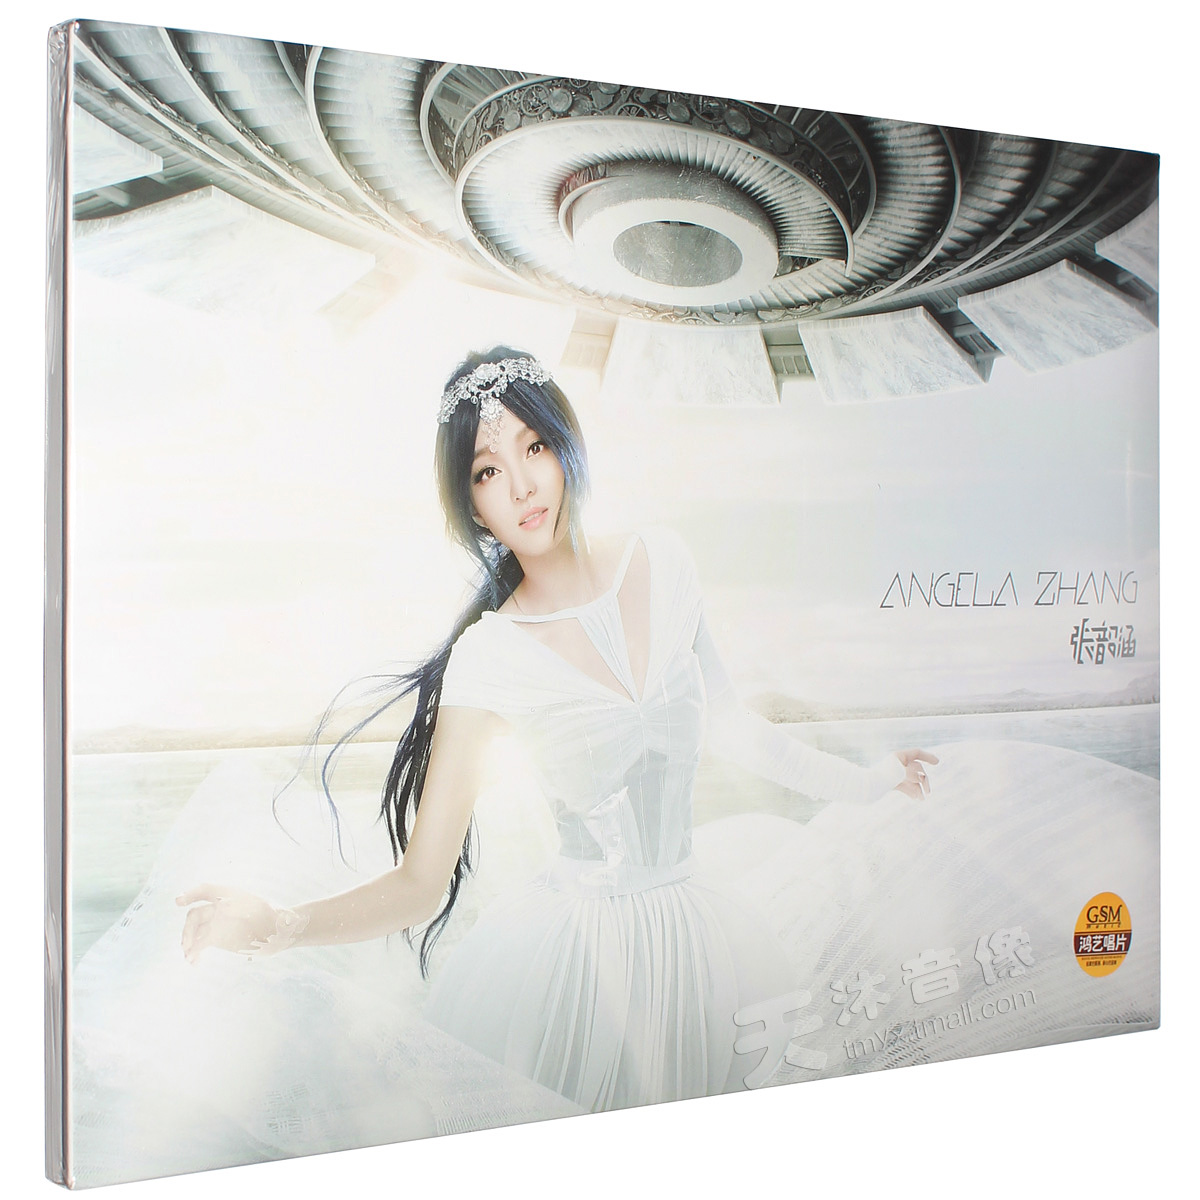 【正版】张韶涵 angela zhang 2014新专辑 CD+大海报+写真册